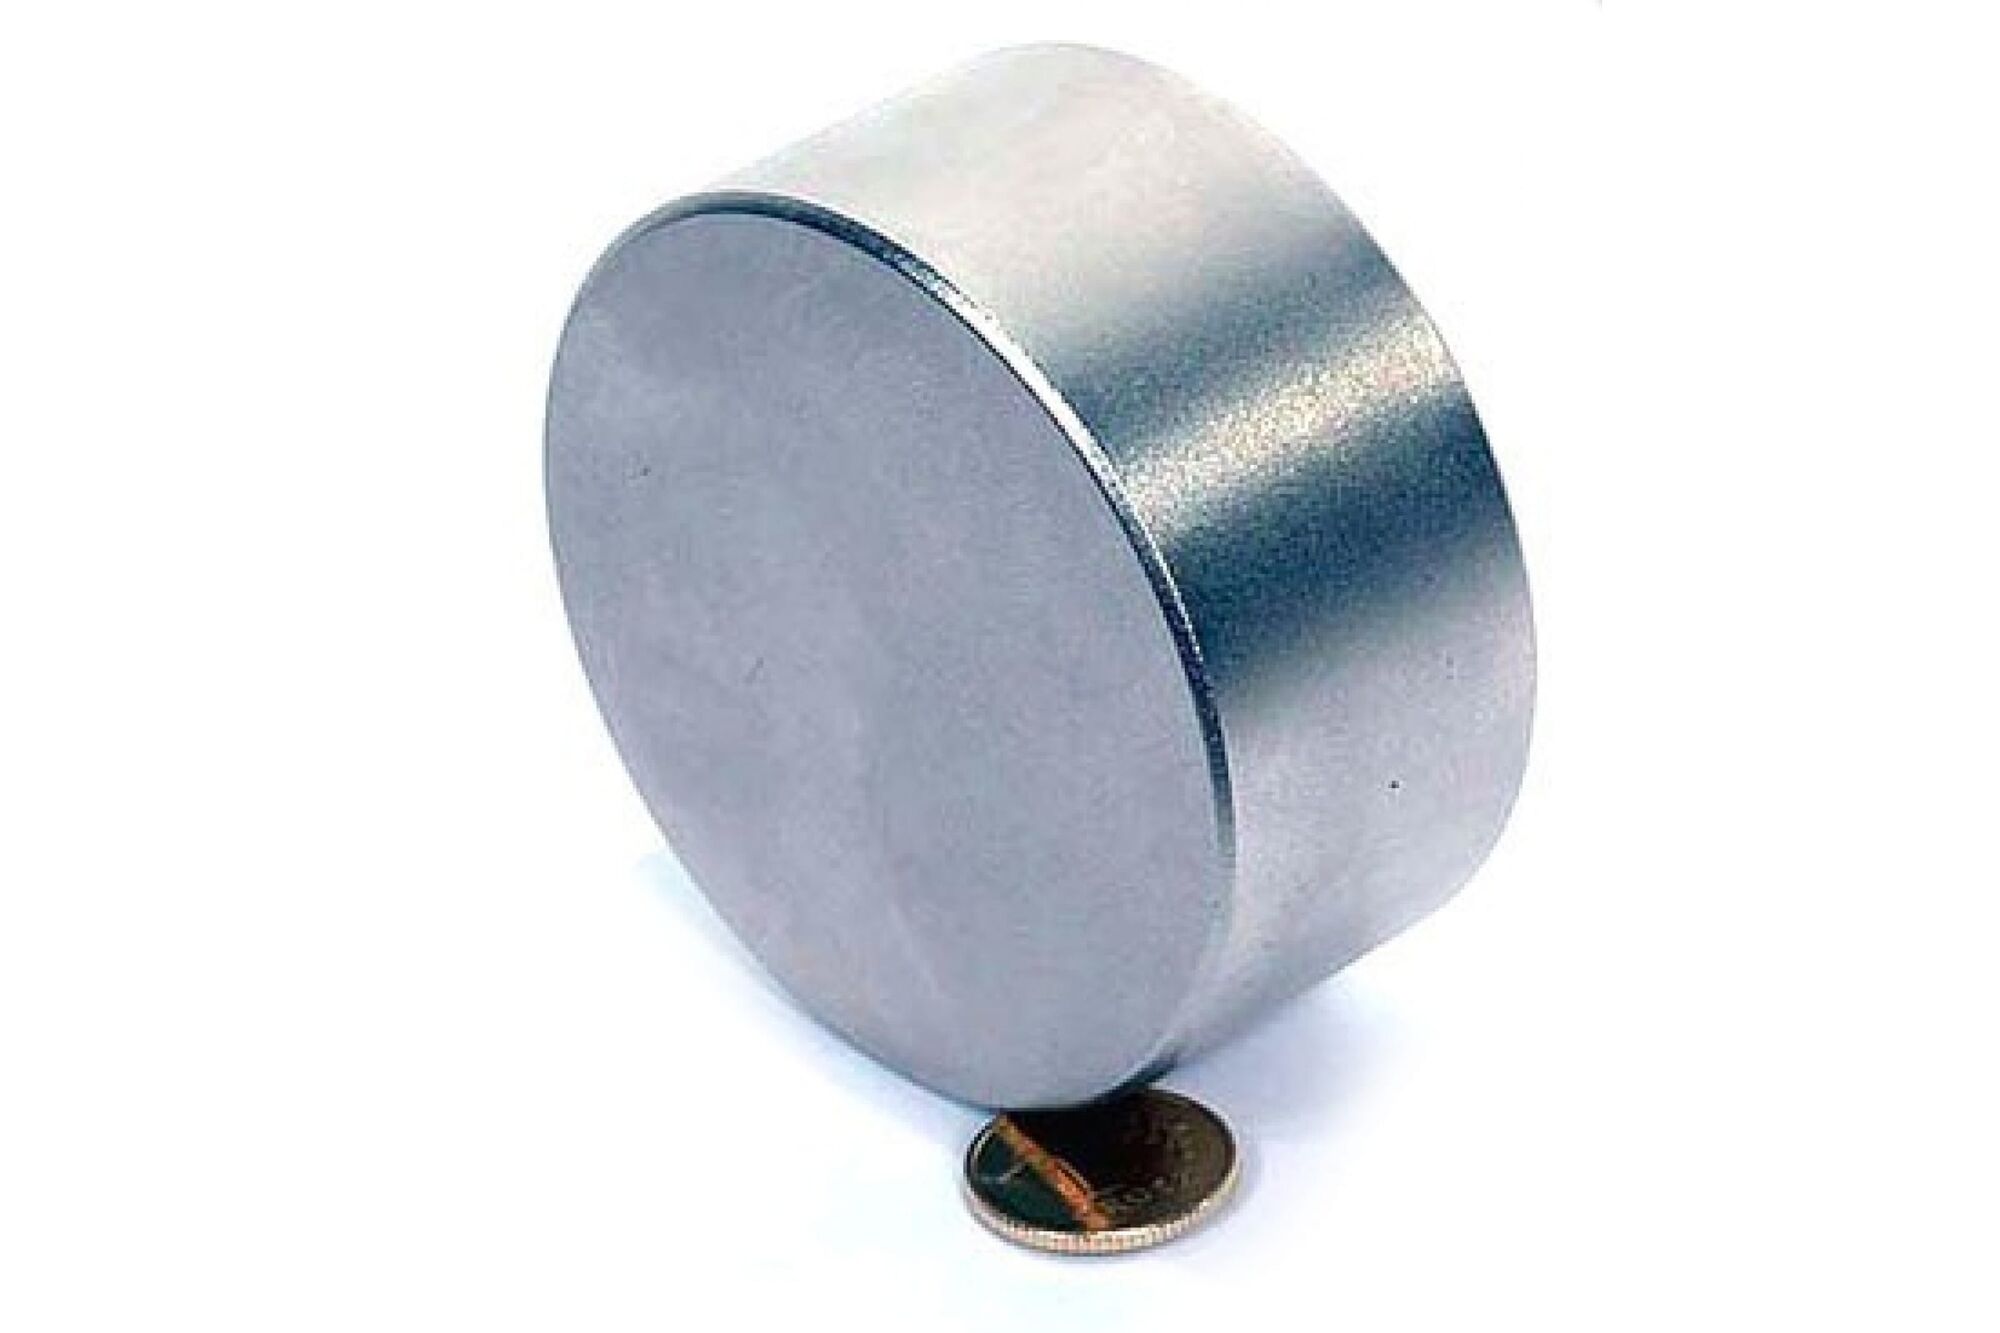 Неодимовый магнит Magnet LTD 50х20 мм N45 2000178324005